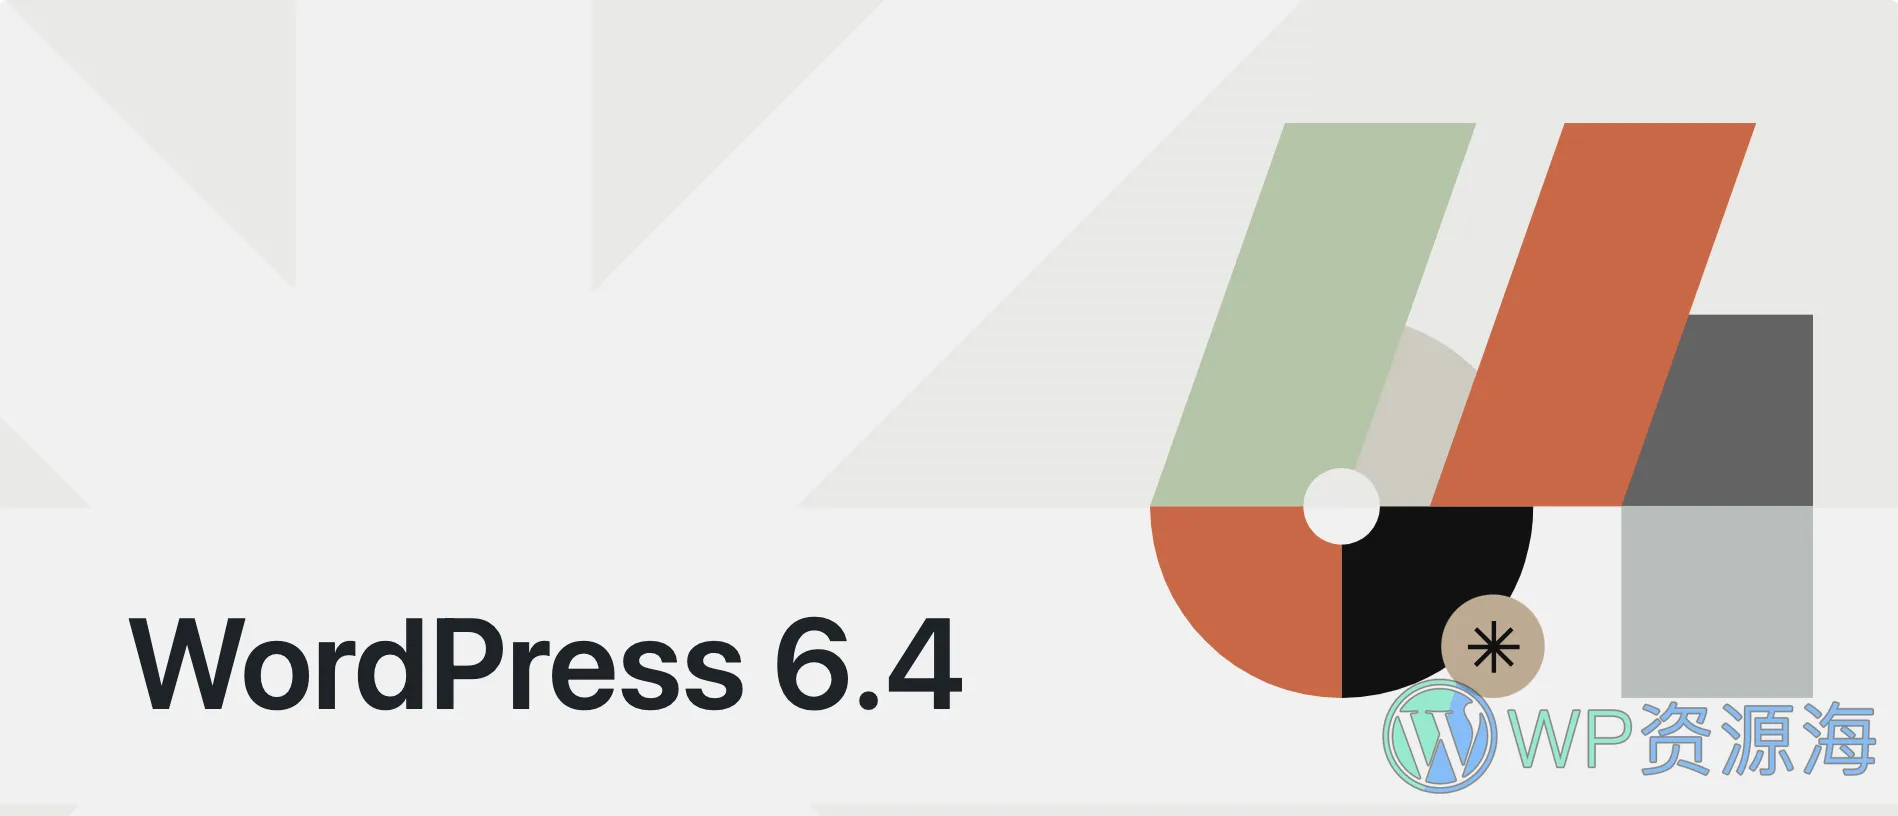 WordPress v6.4.0 正式版已发布 更新内容速览插图1-WordPress资源海